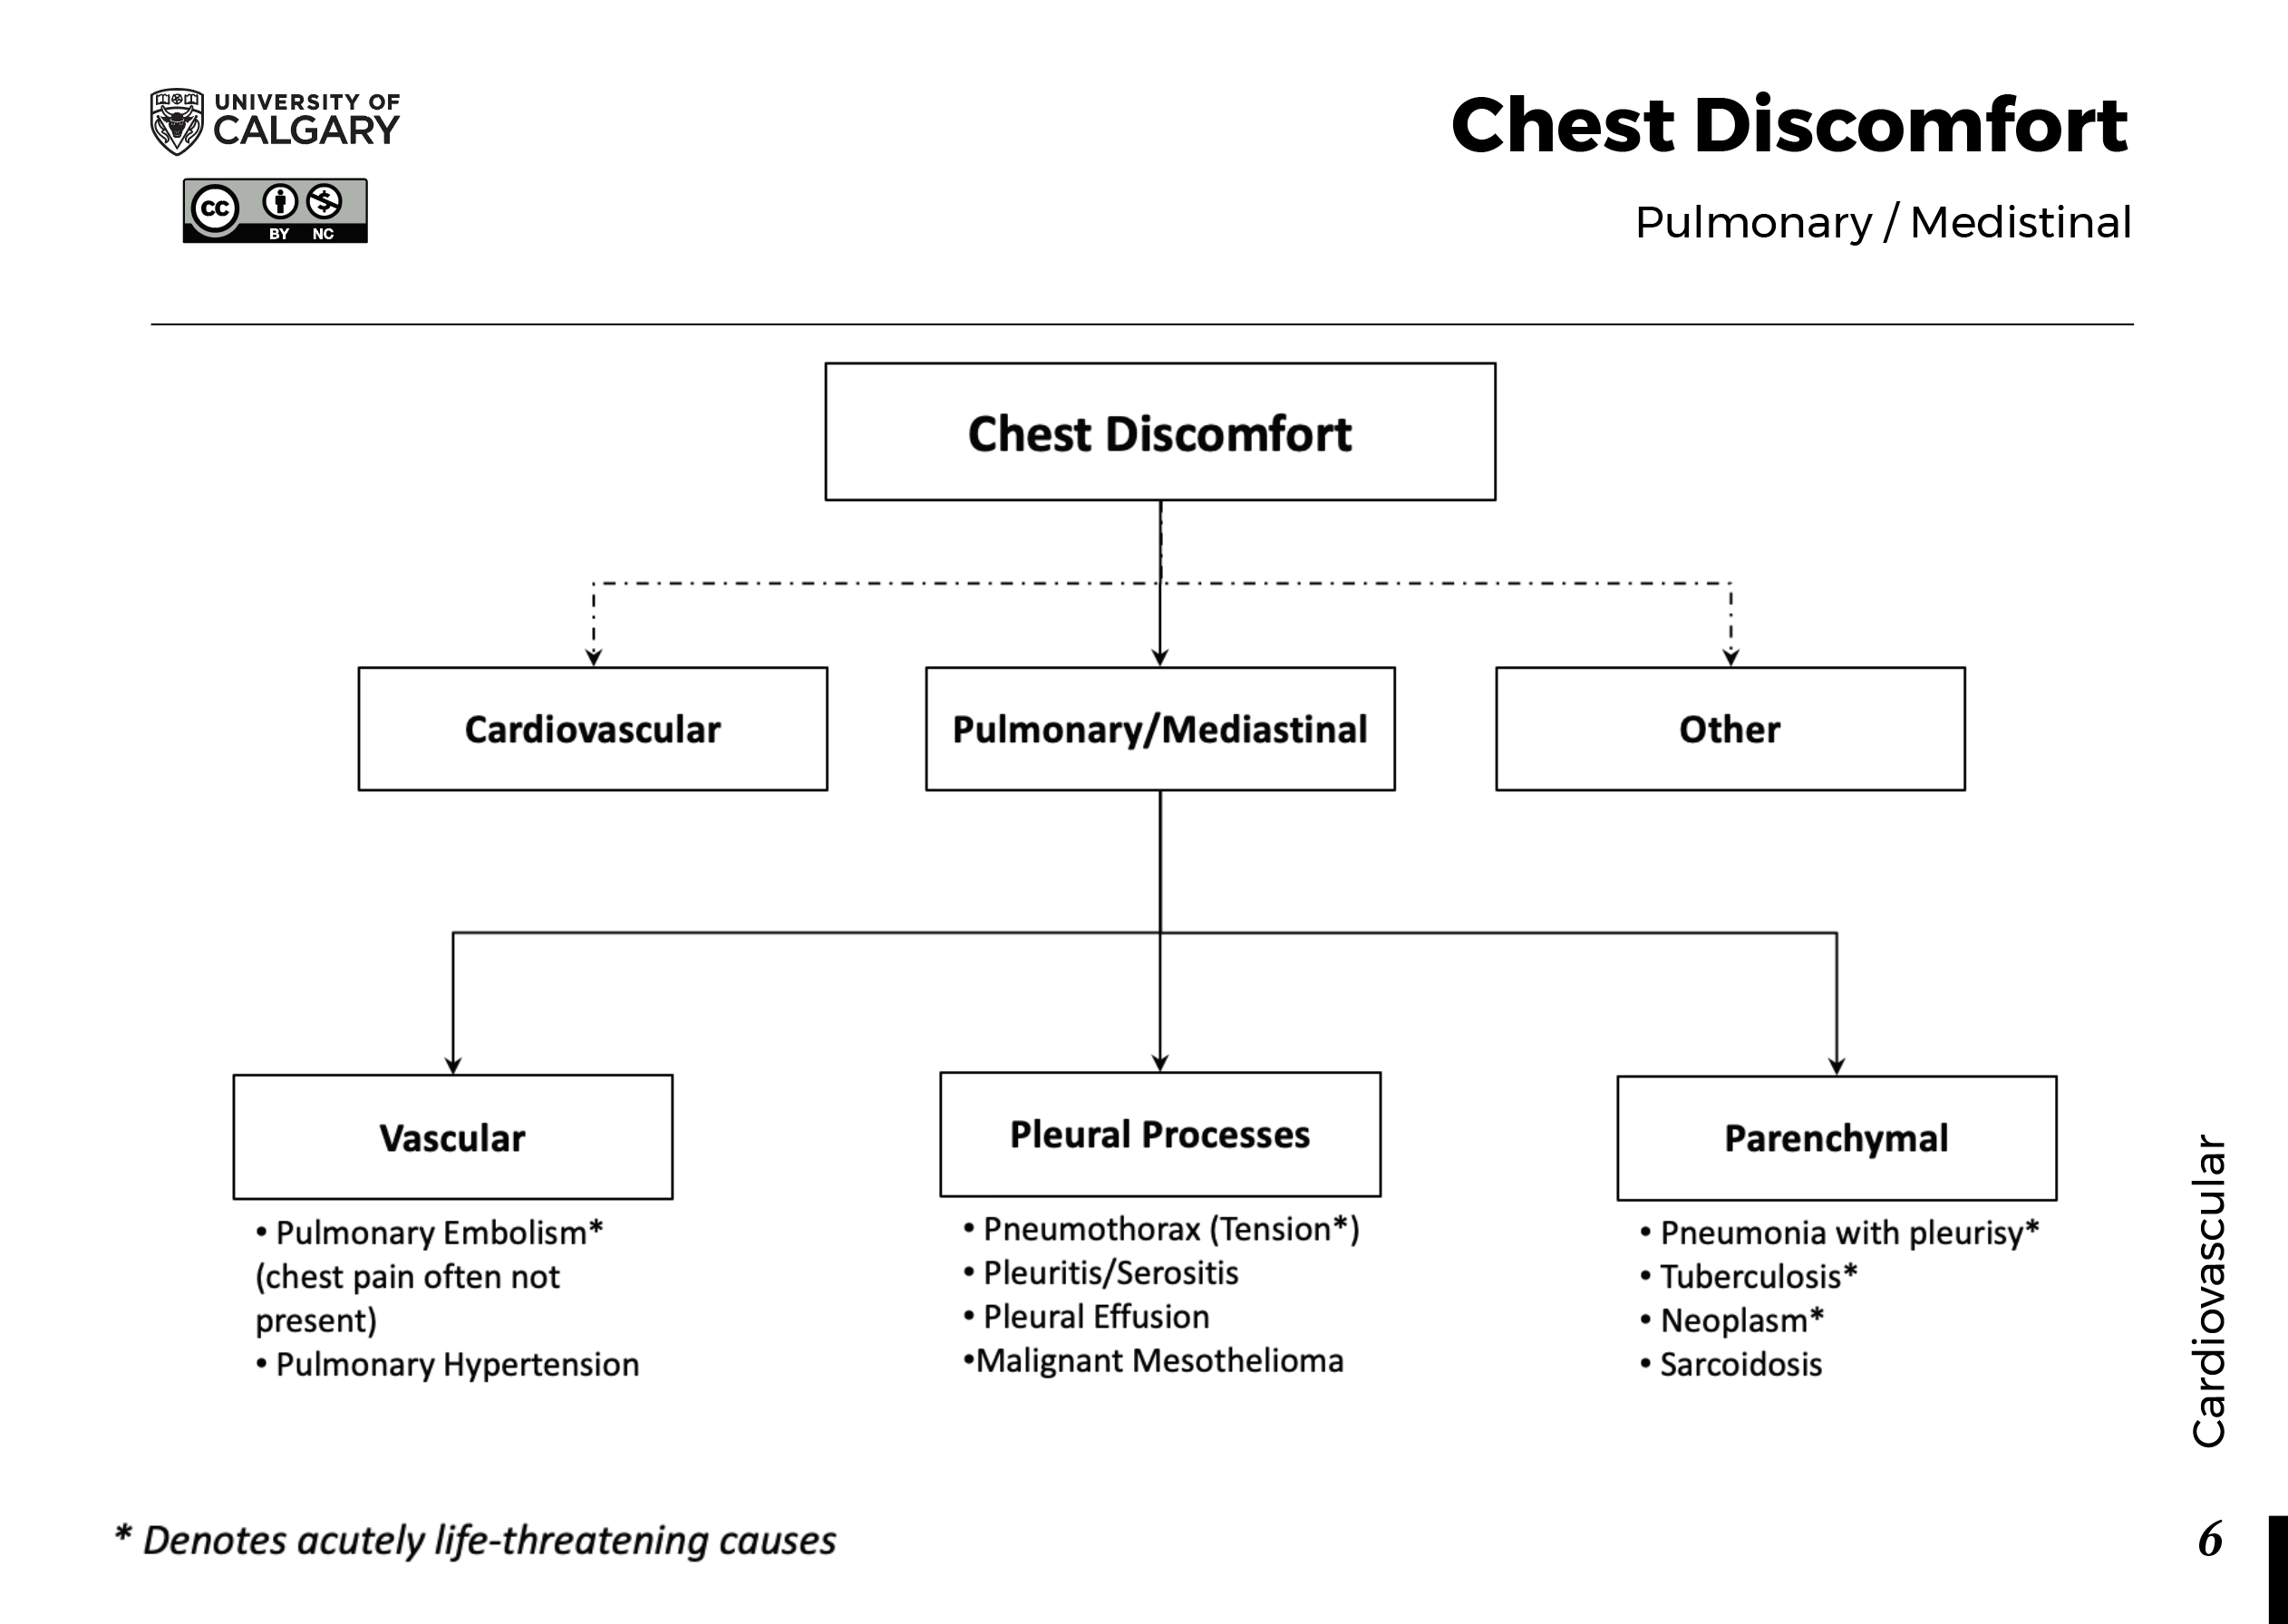 CHEST DISCOMFORT: Pulmonary / Mediastinal Scheme